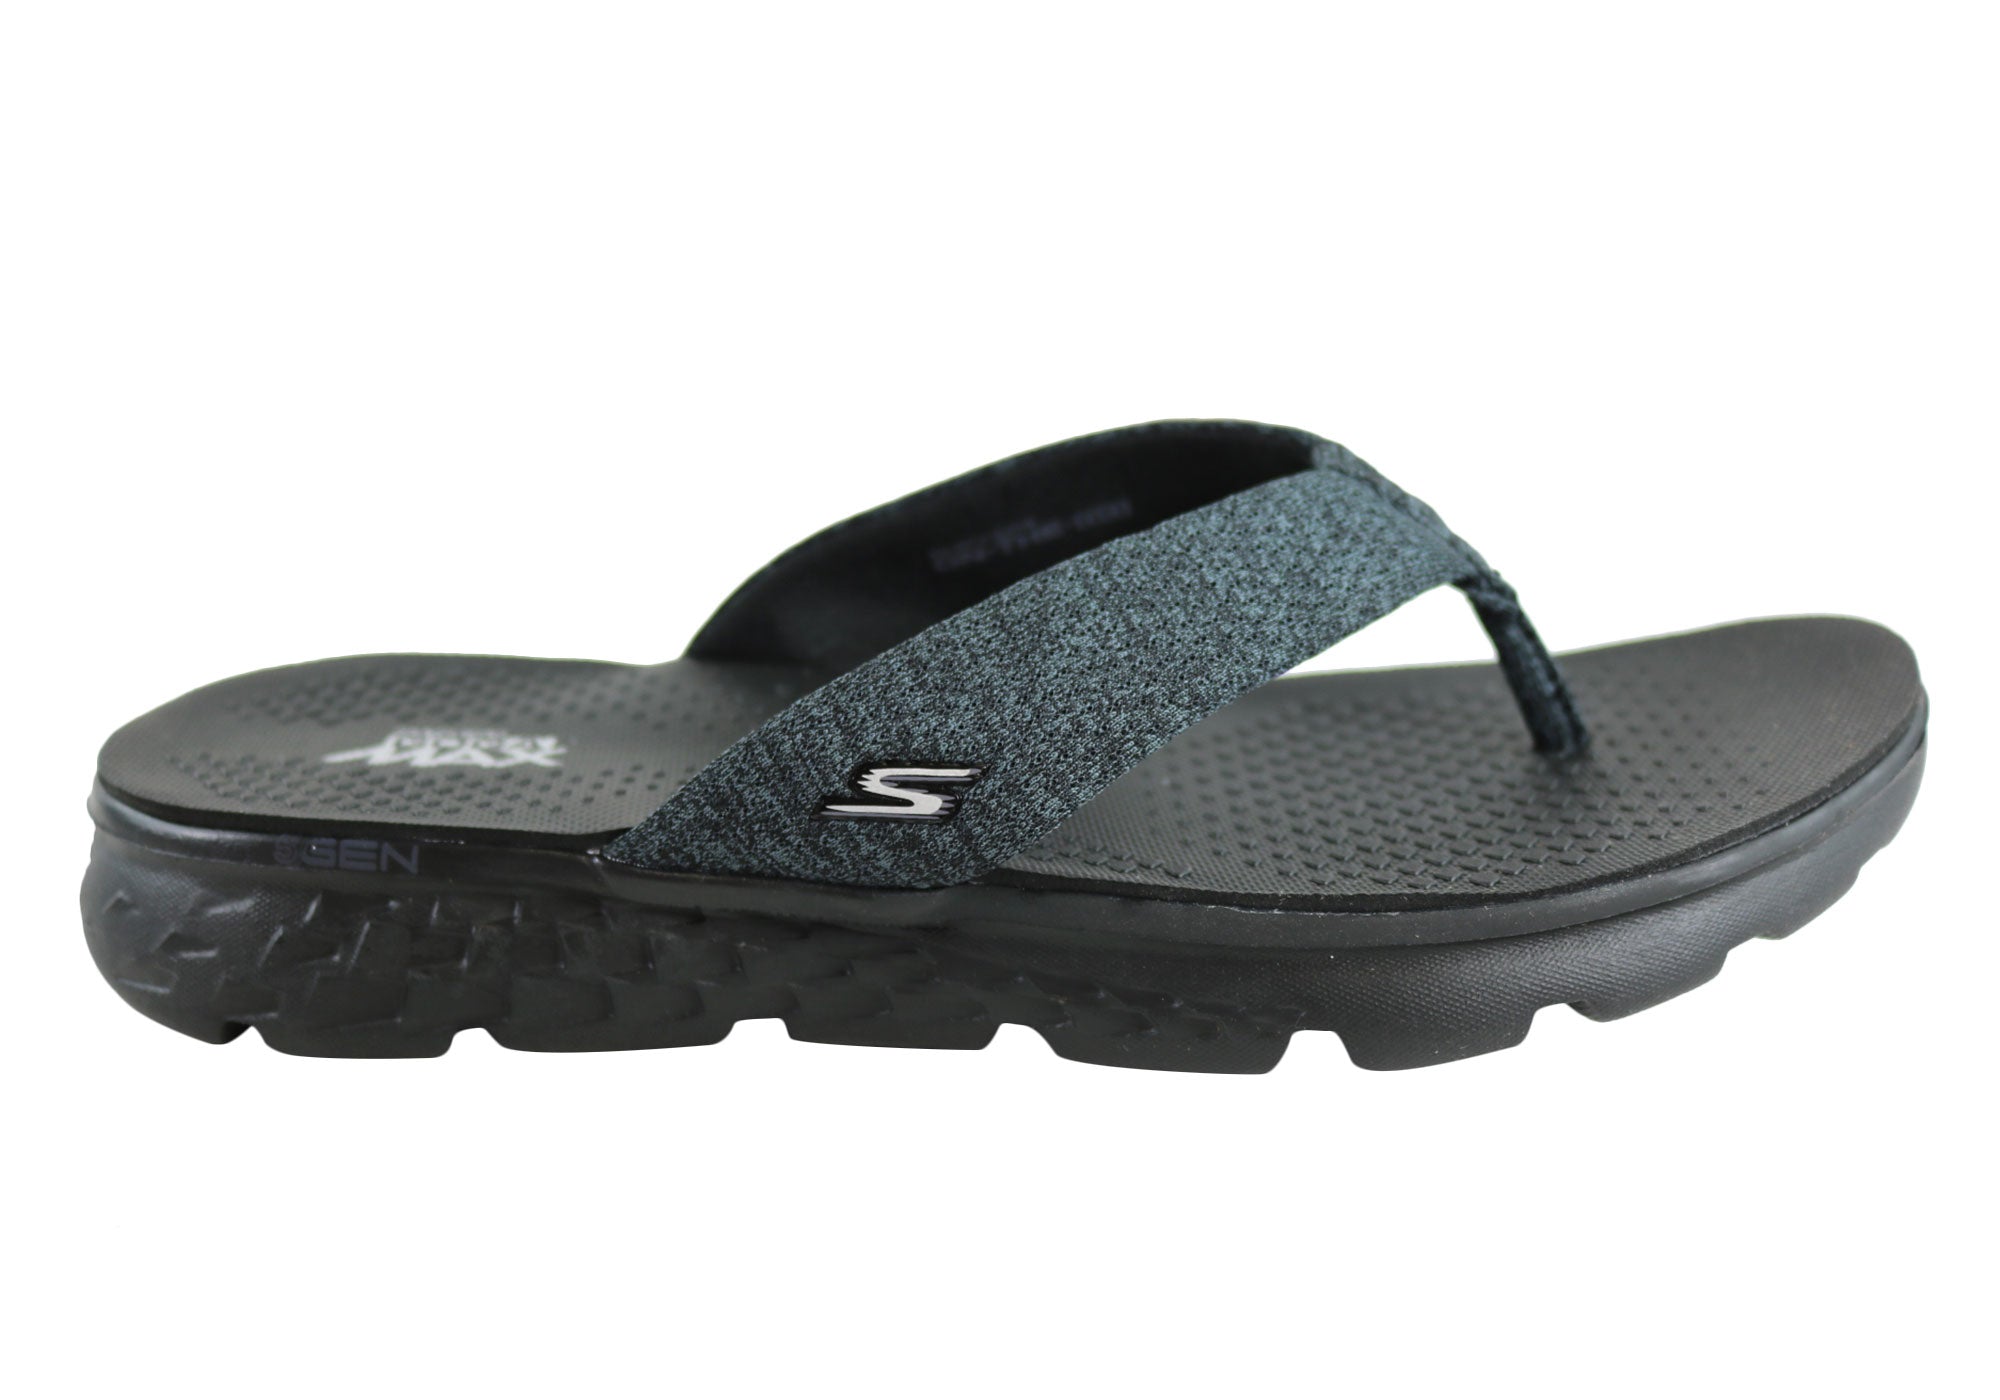 skechers women's thong sandals